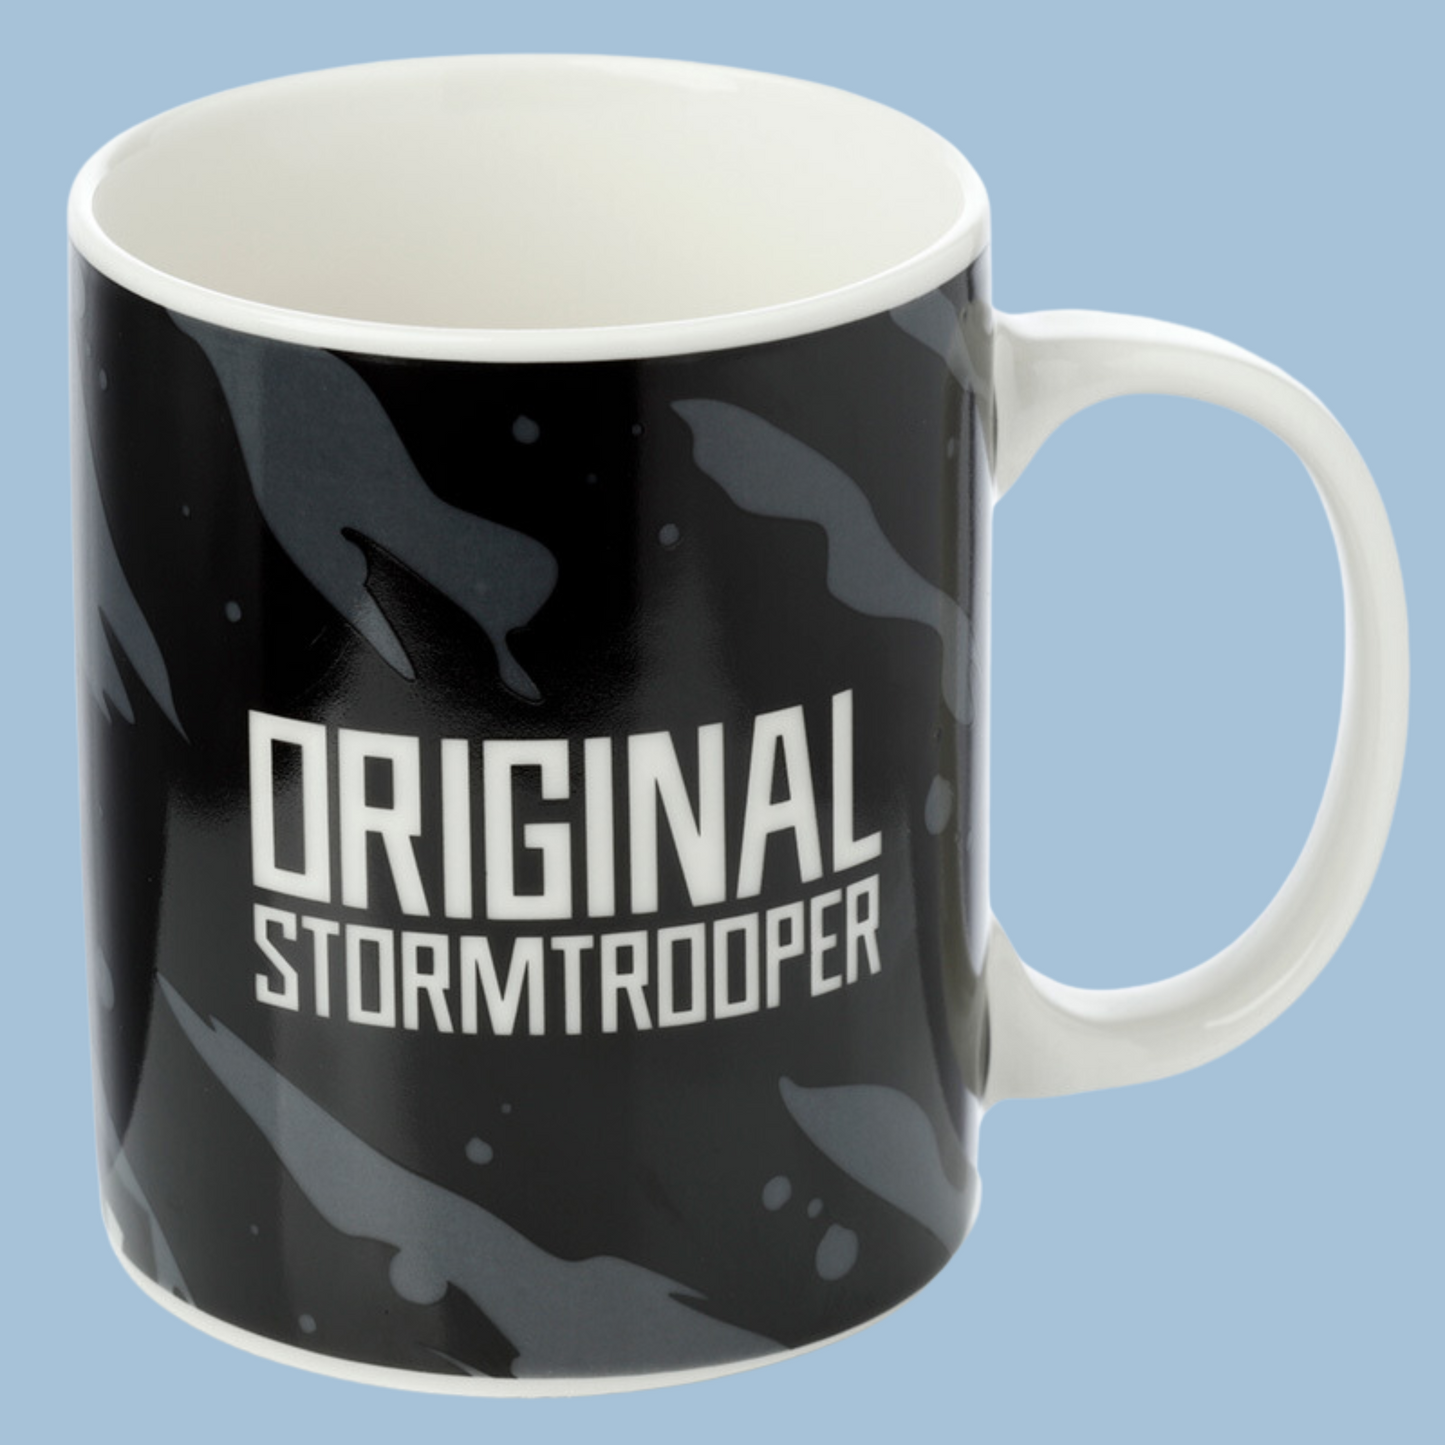 Original Stormtrooper Black Mug Star Wars Fan Gift 1976 Stormtrooper Design